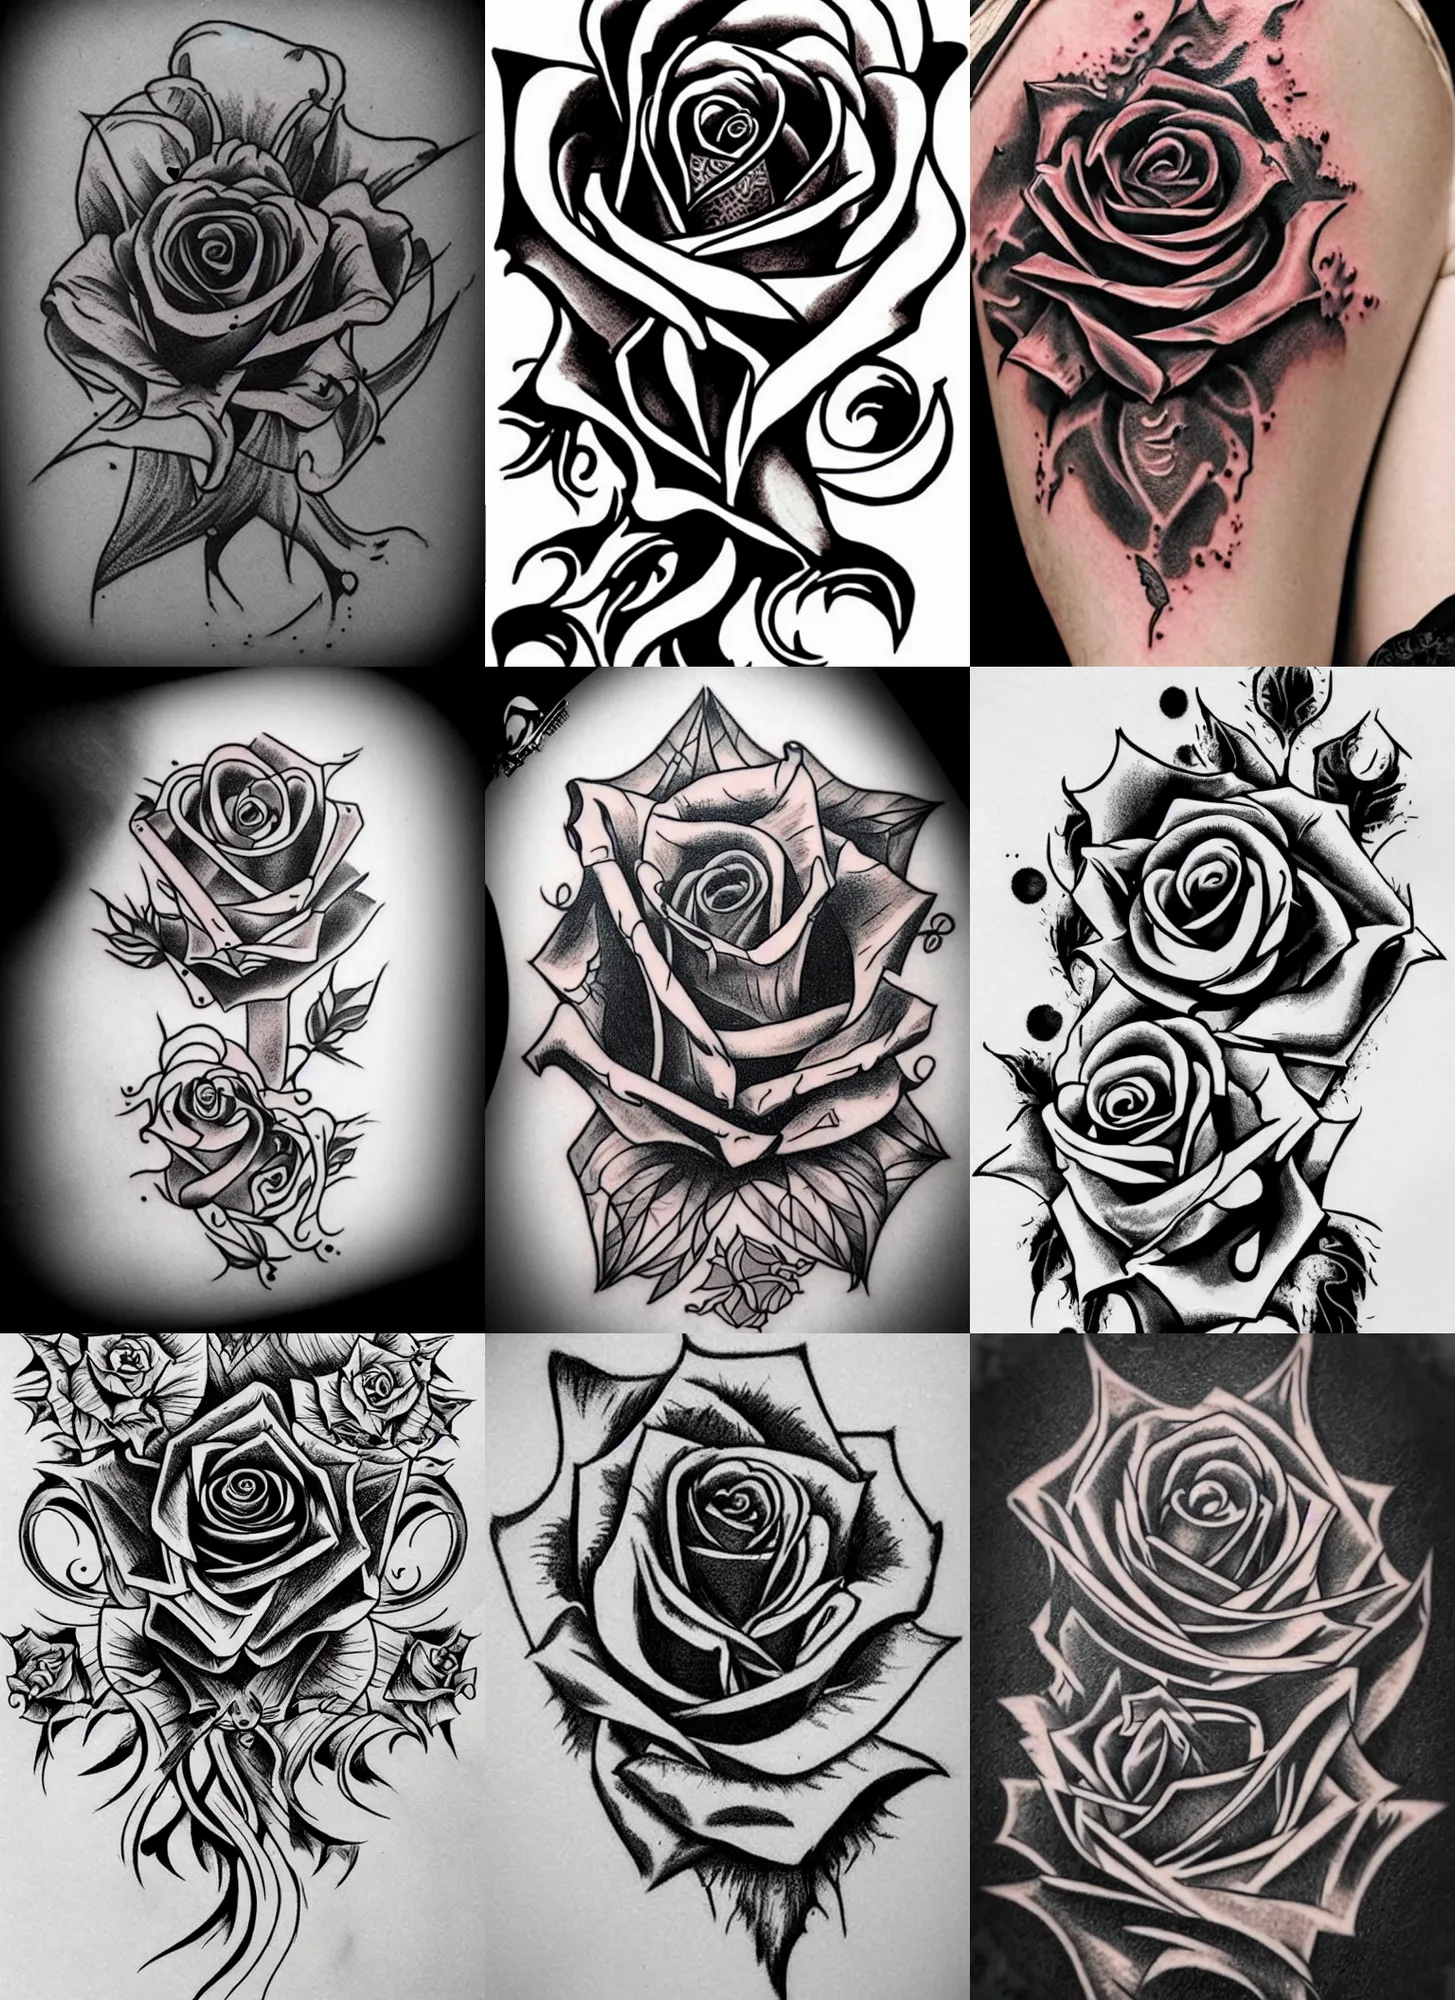 Prompt: Tattoo Design demonic, evil rose Stencil